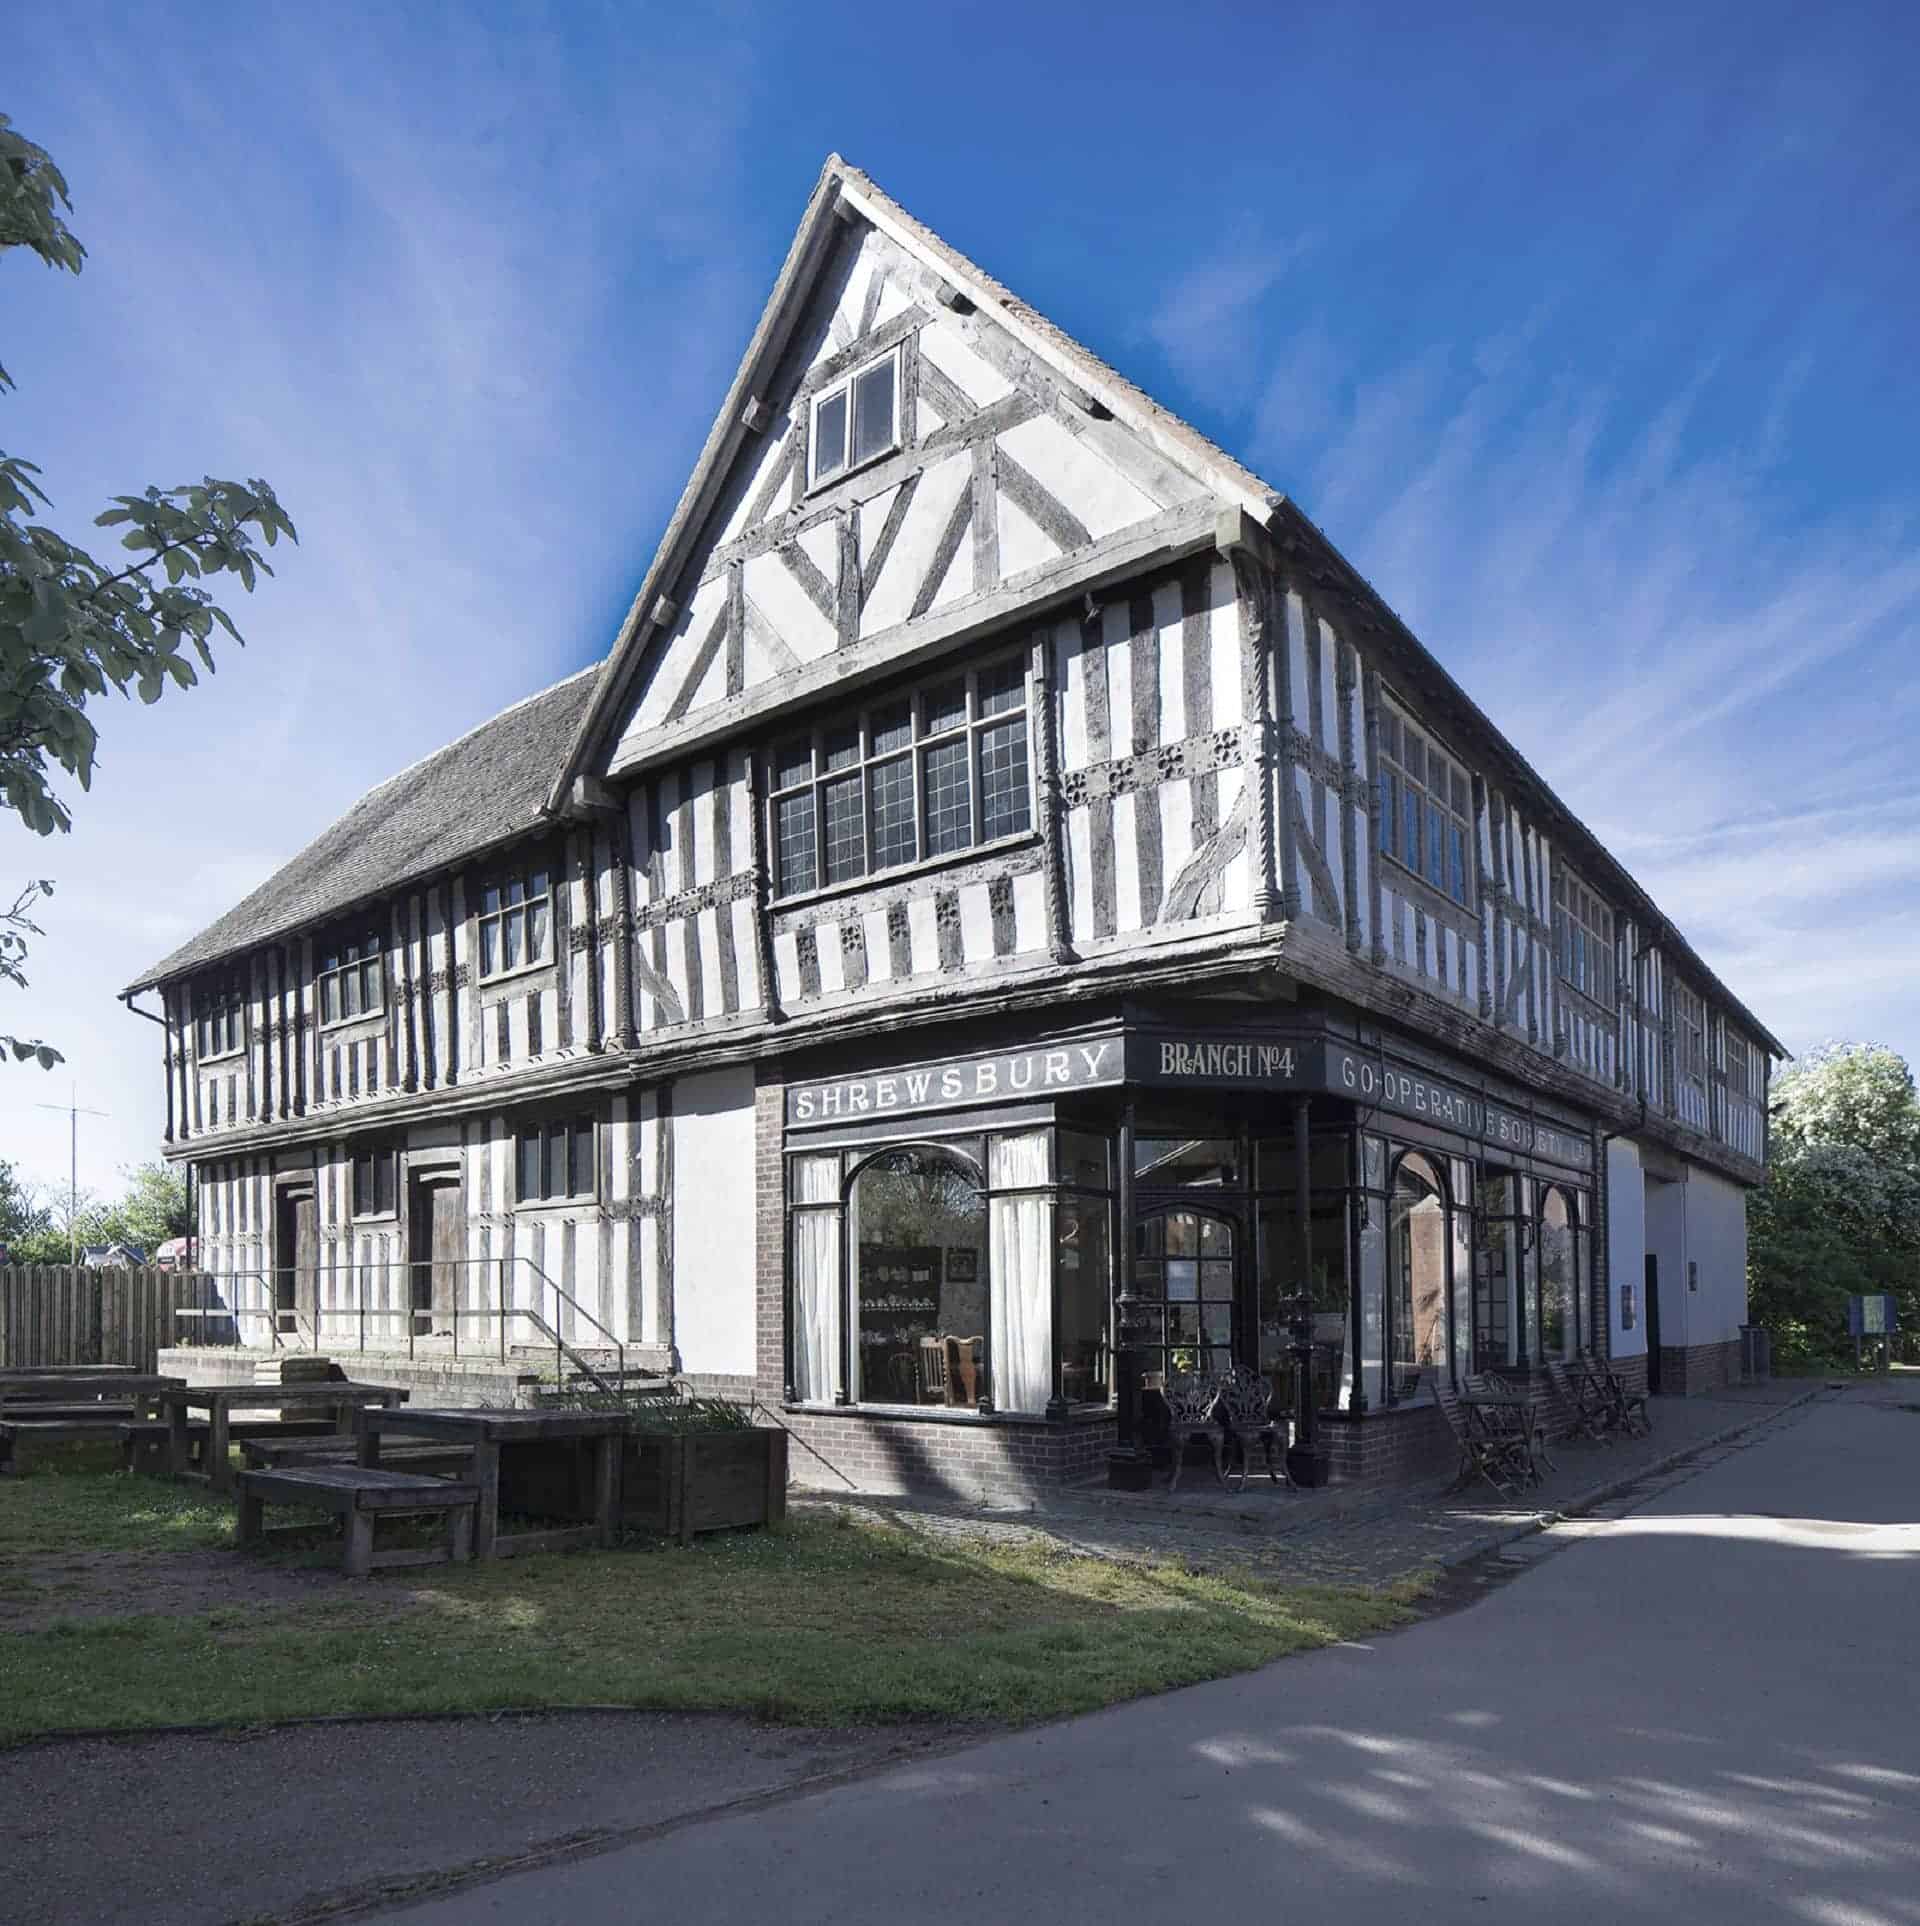 Avoncroft Museum of Historic Buildings in UK